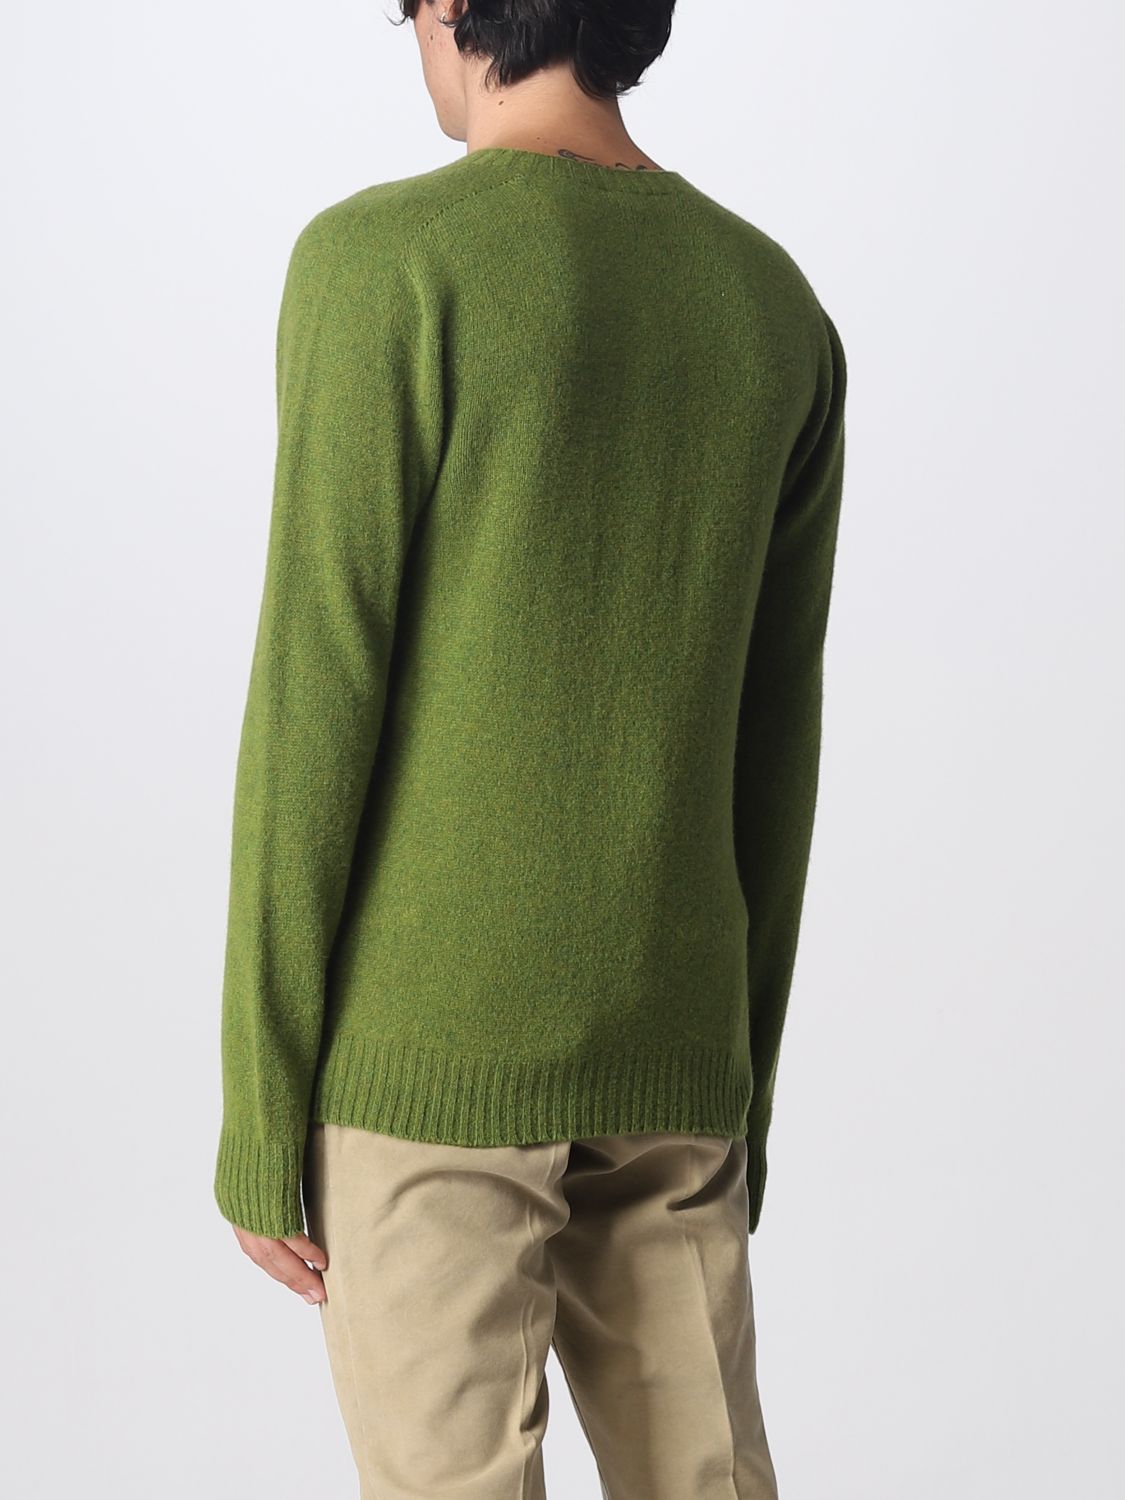 ALTEA: sweater for man - Pistachio | Altea sweater 2261005 online on ...